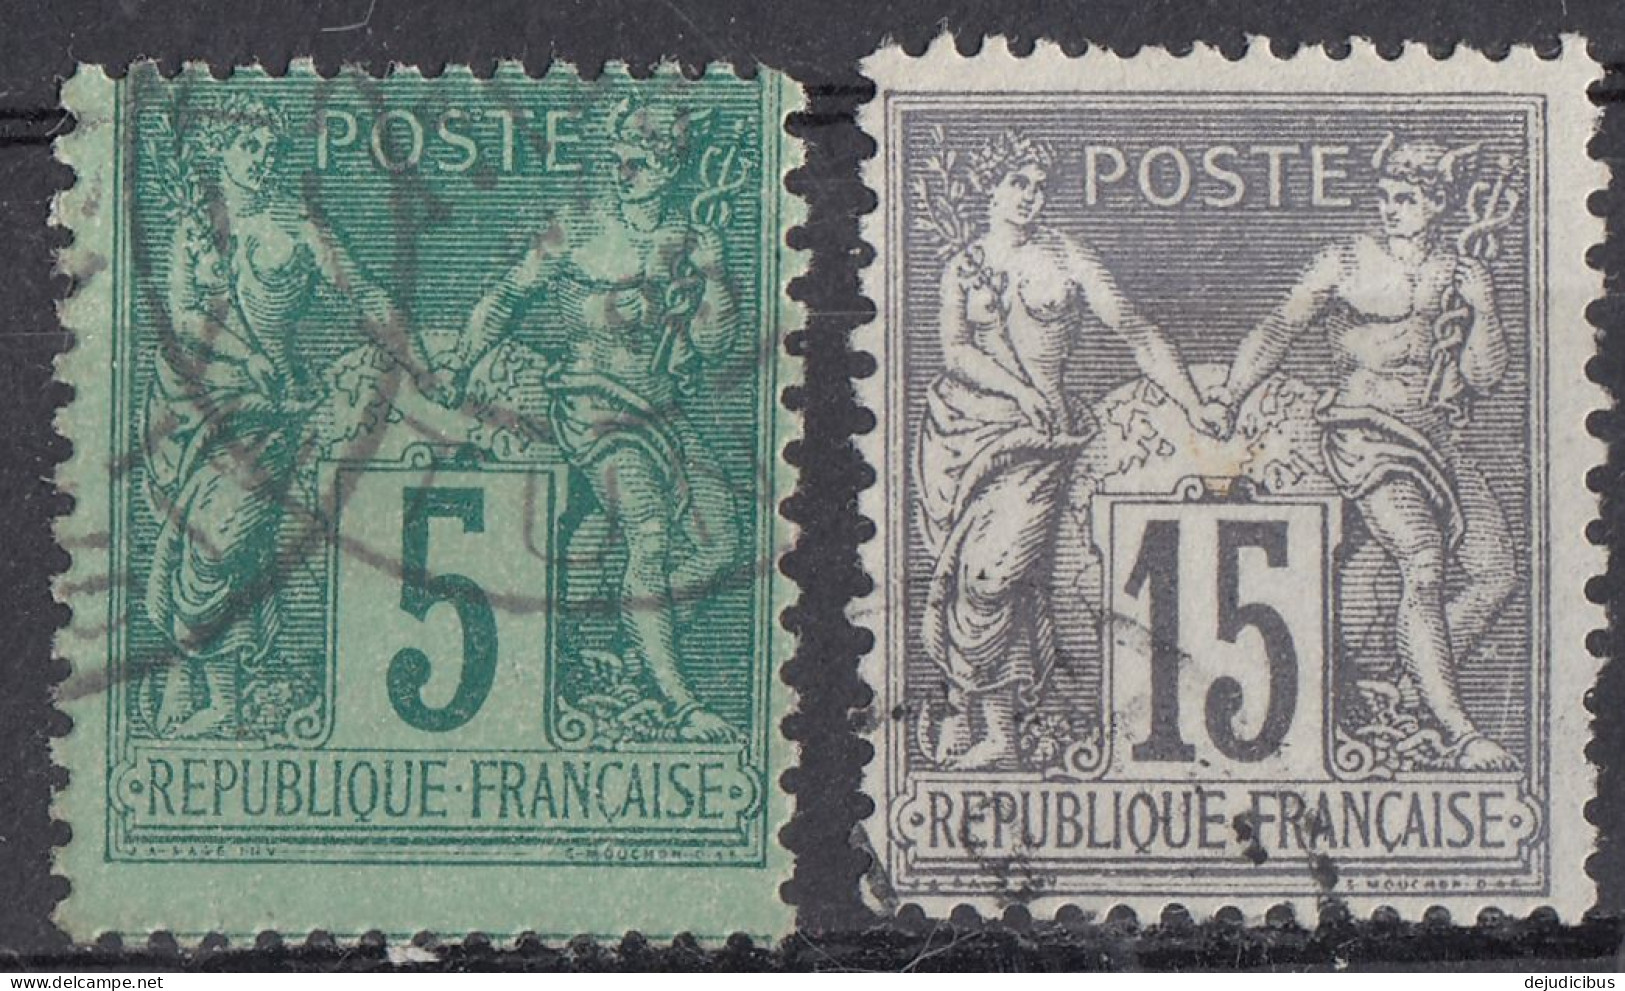 FRANCE - 1876 - Due Valori Usati: Yvert 75 E 77 - 1876-1898 Sage (Type II)